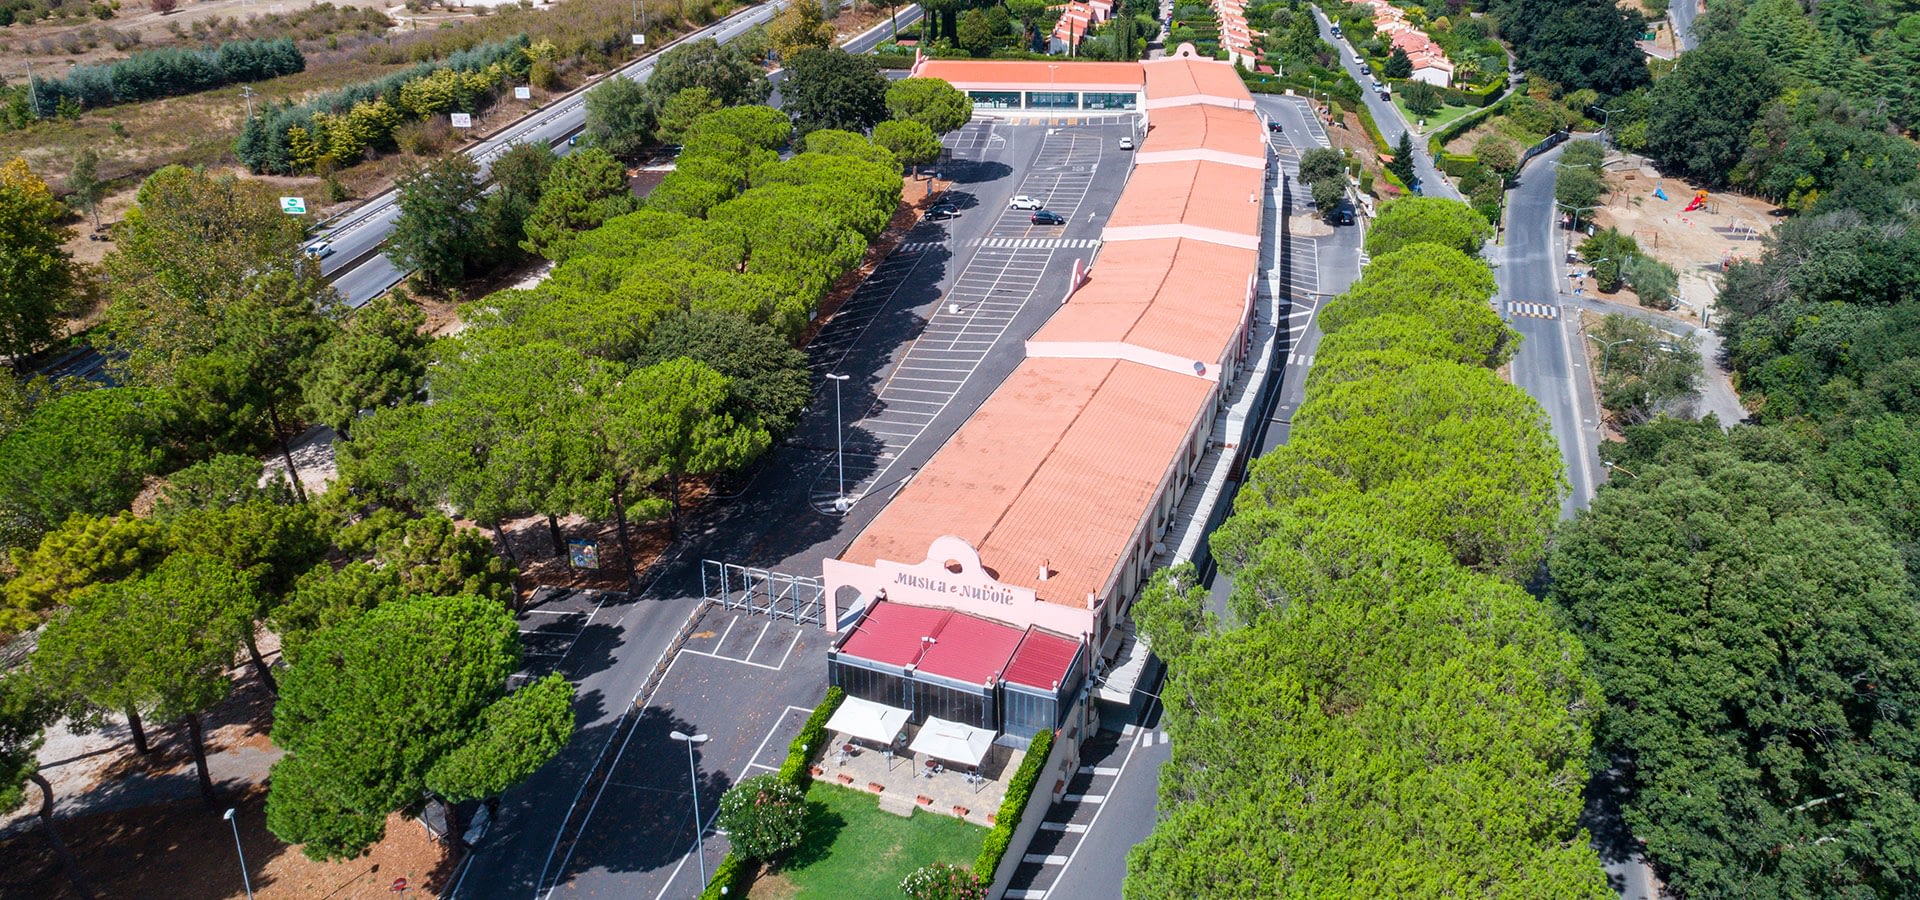 Centro Commerciale Le Rughe - Formello (RM) - Panoramica